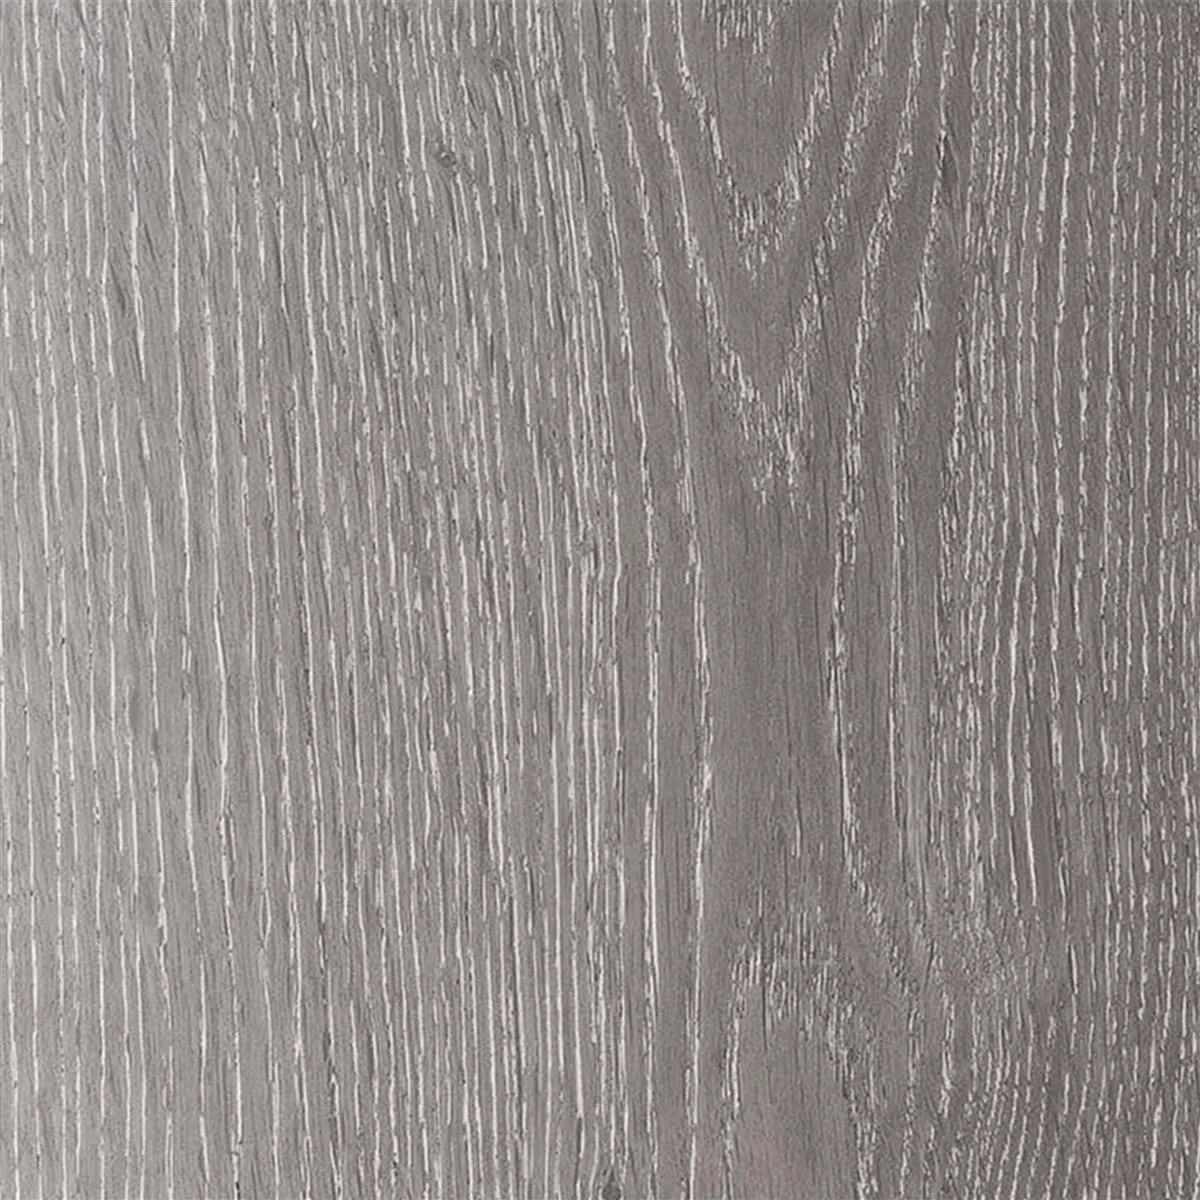 Piso De Vinil Sistema De Clique Woodburn Cinza 17,2x121cm